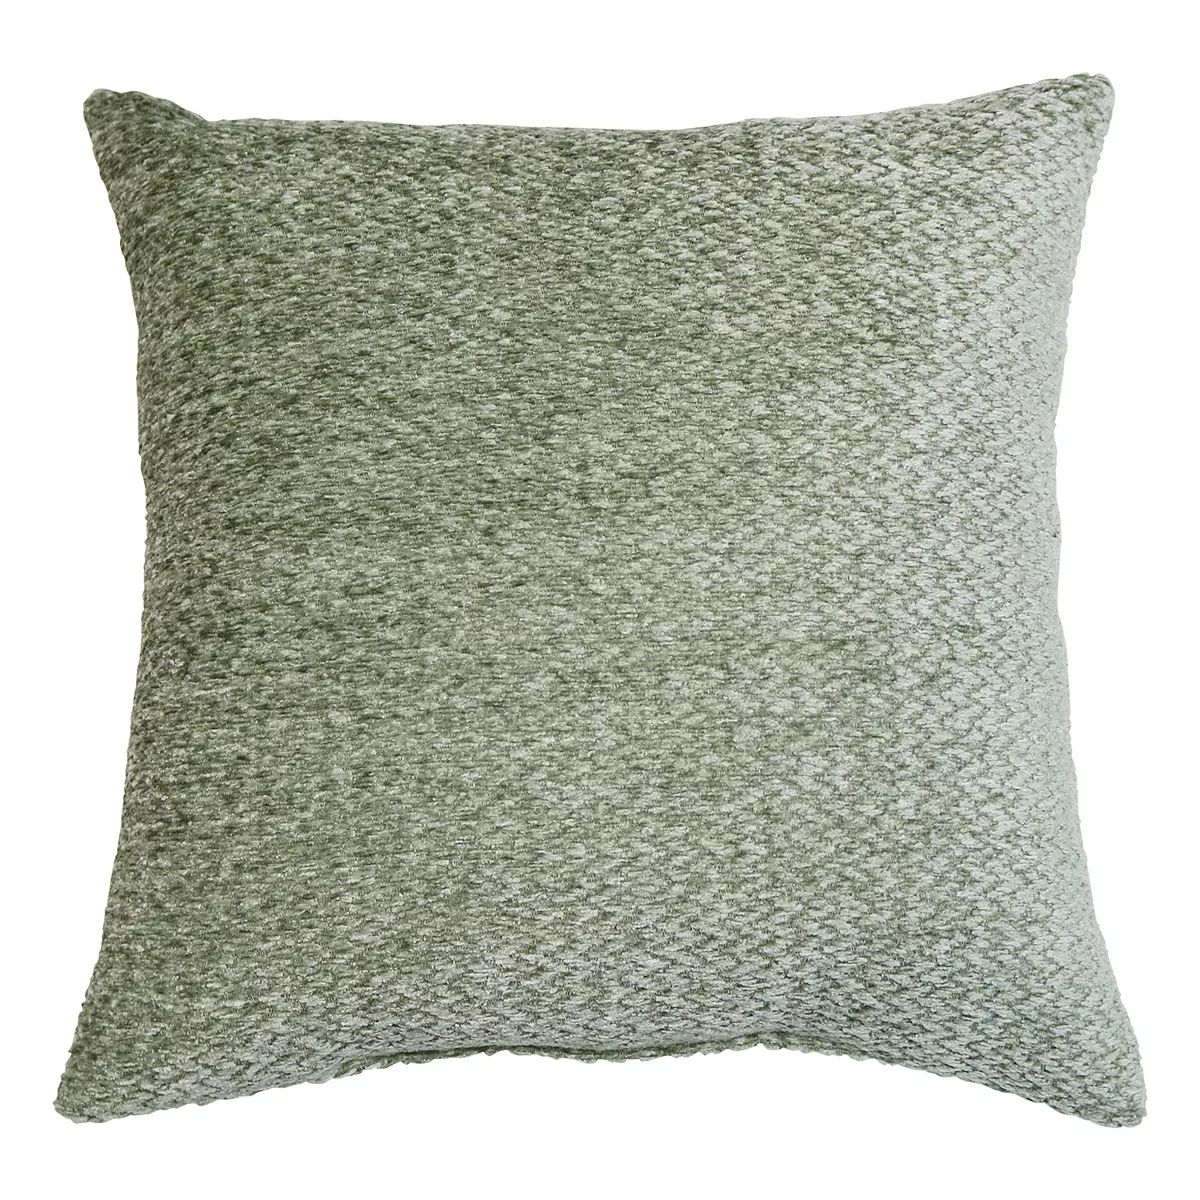 Farifield Chenille Pillow | Kohl's